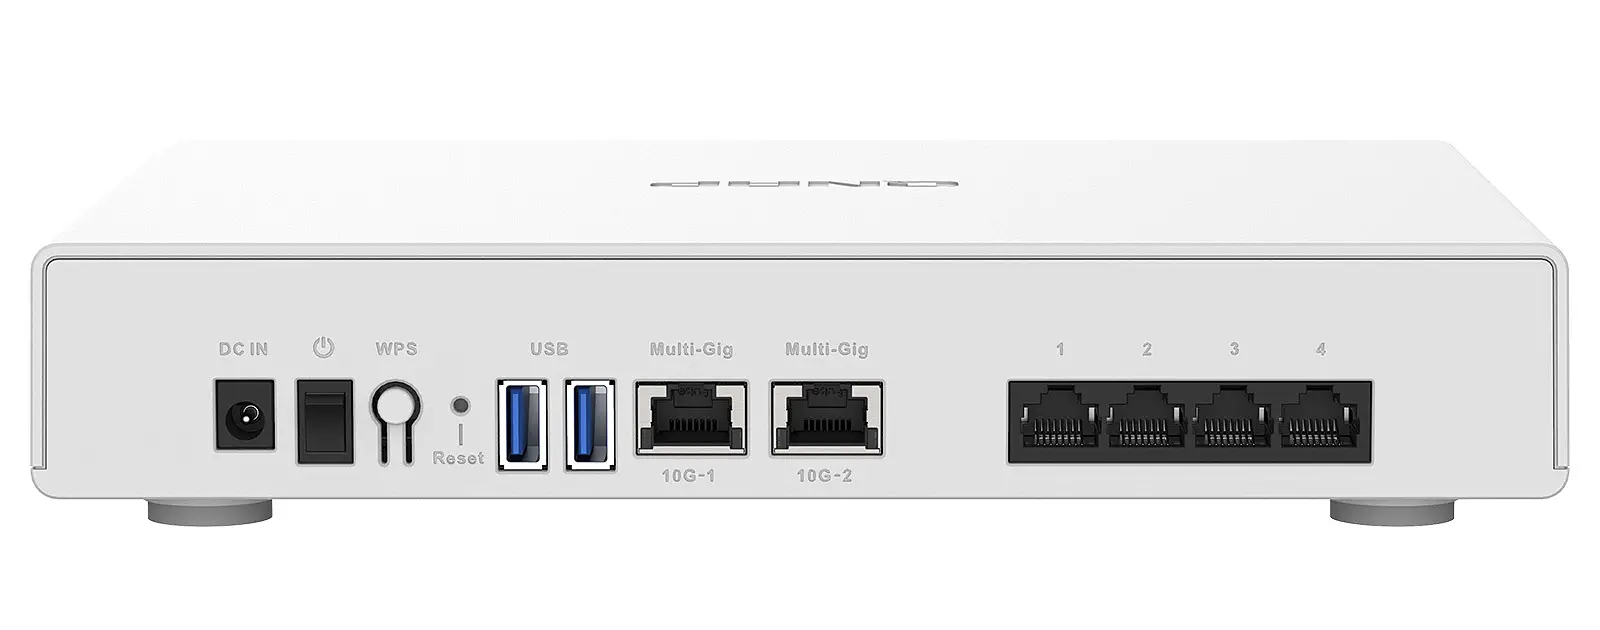 Qnap QHora-301W è dotato di 6 porte Ethernet di cui 2 10GbE